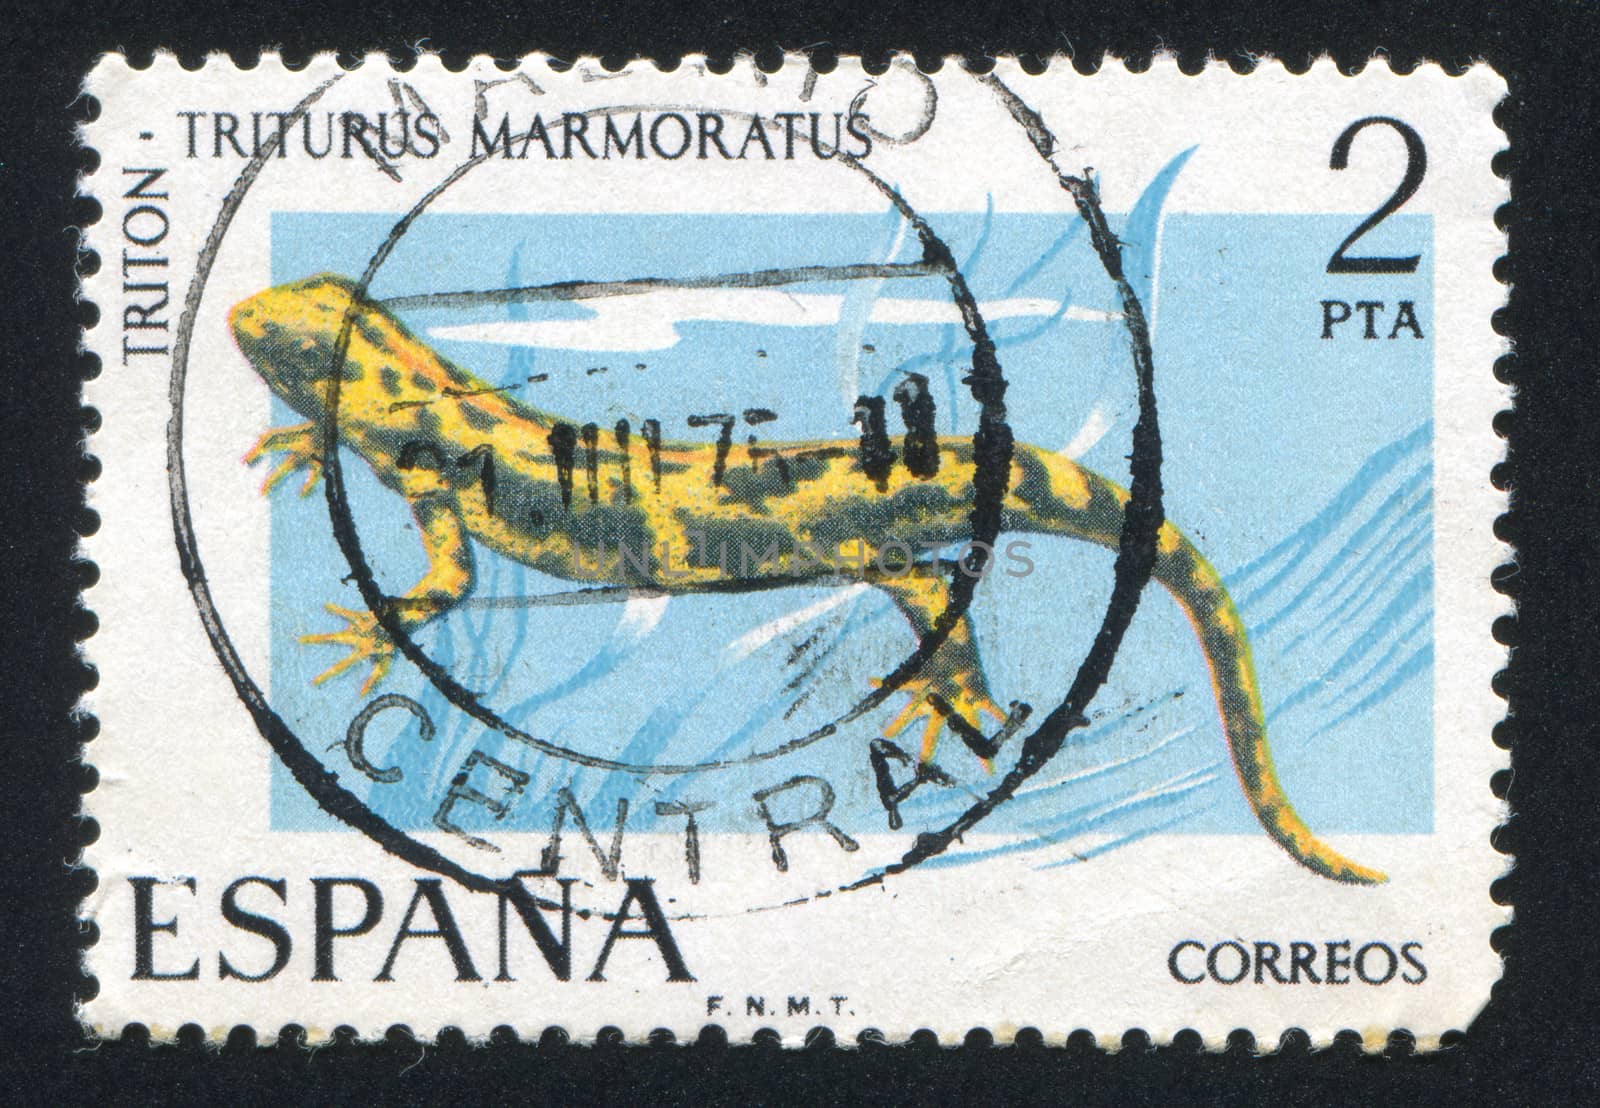 SPAIN - CIRCA 1975: stamp printed by Spain, shows Newt, circa 1975